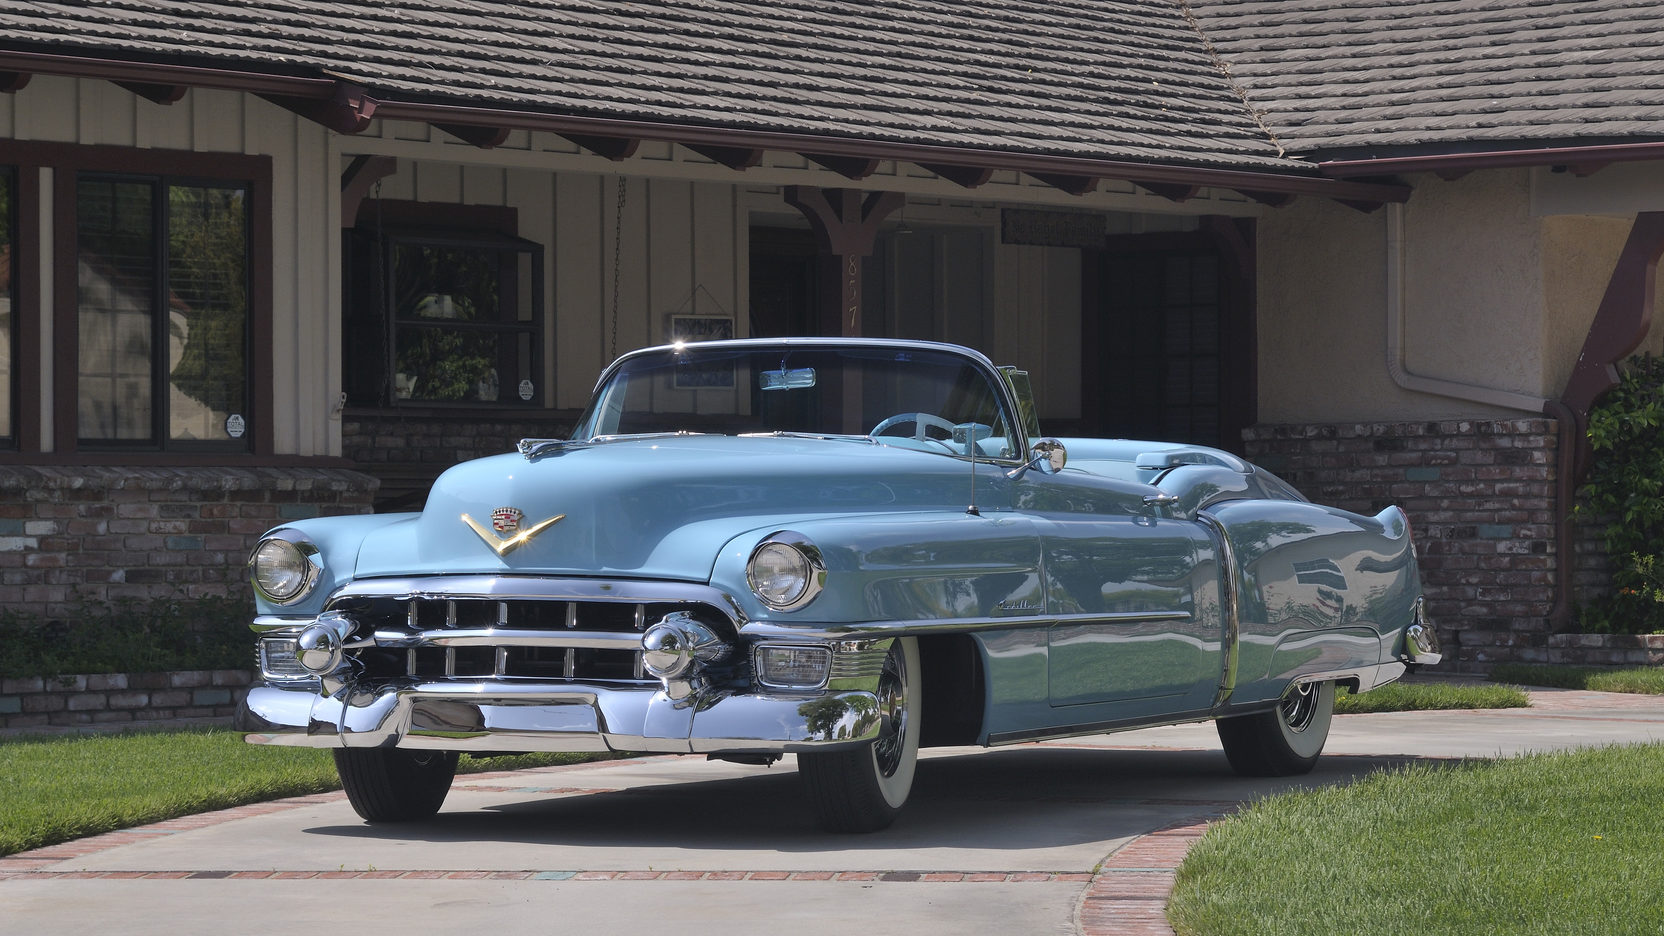 1953 Cadillac Eldorado High Quality Background on Wallpapers Vista